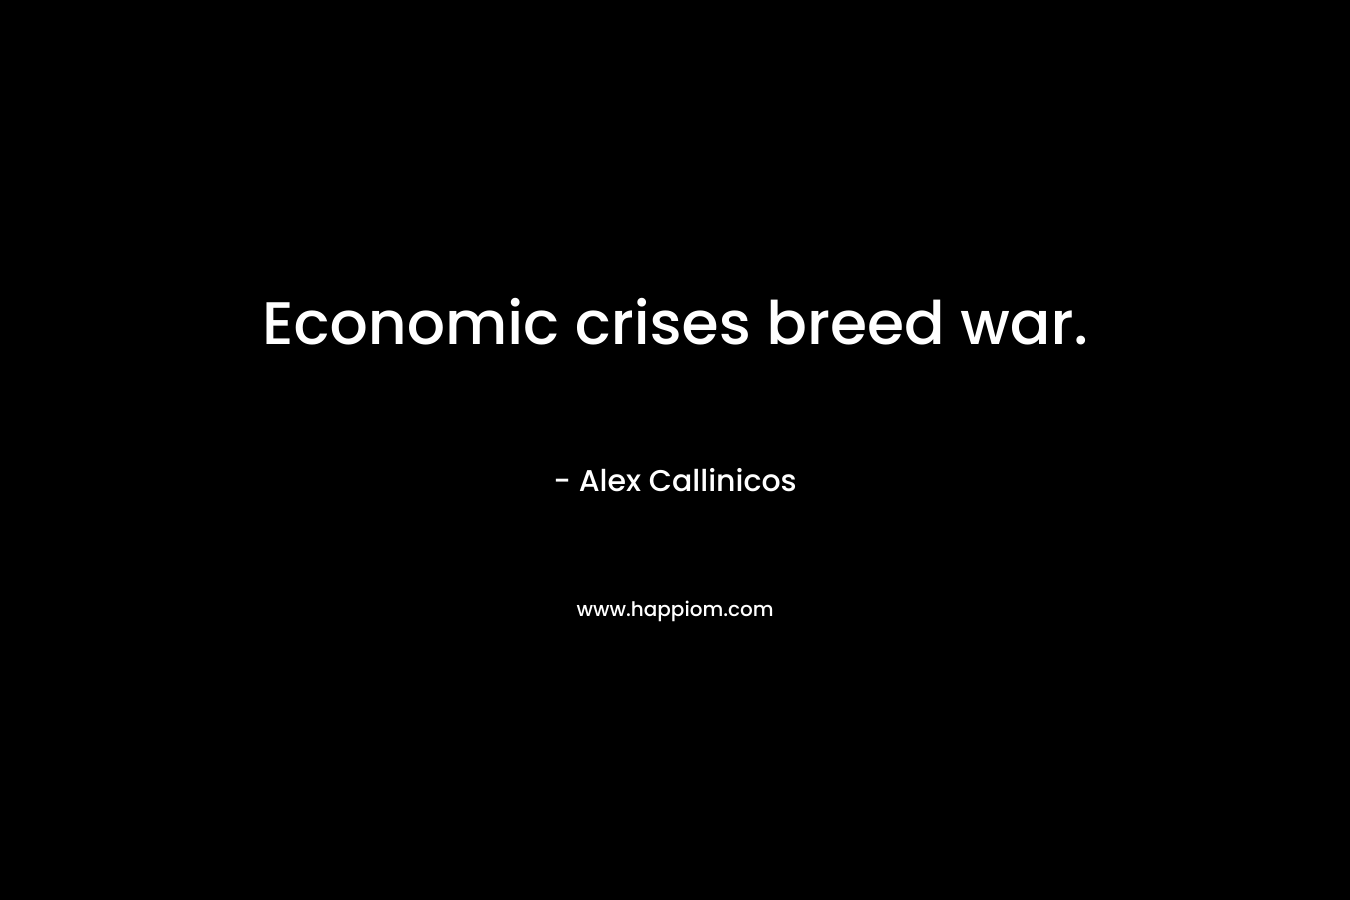 Economic crises breed war.